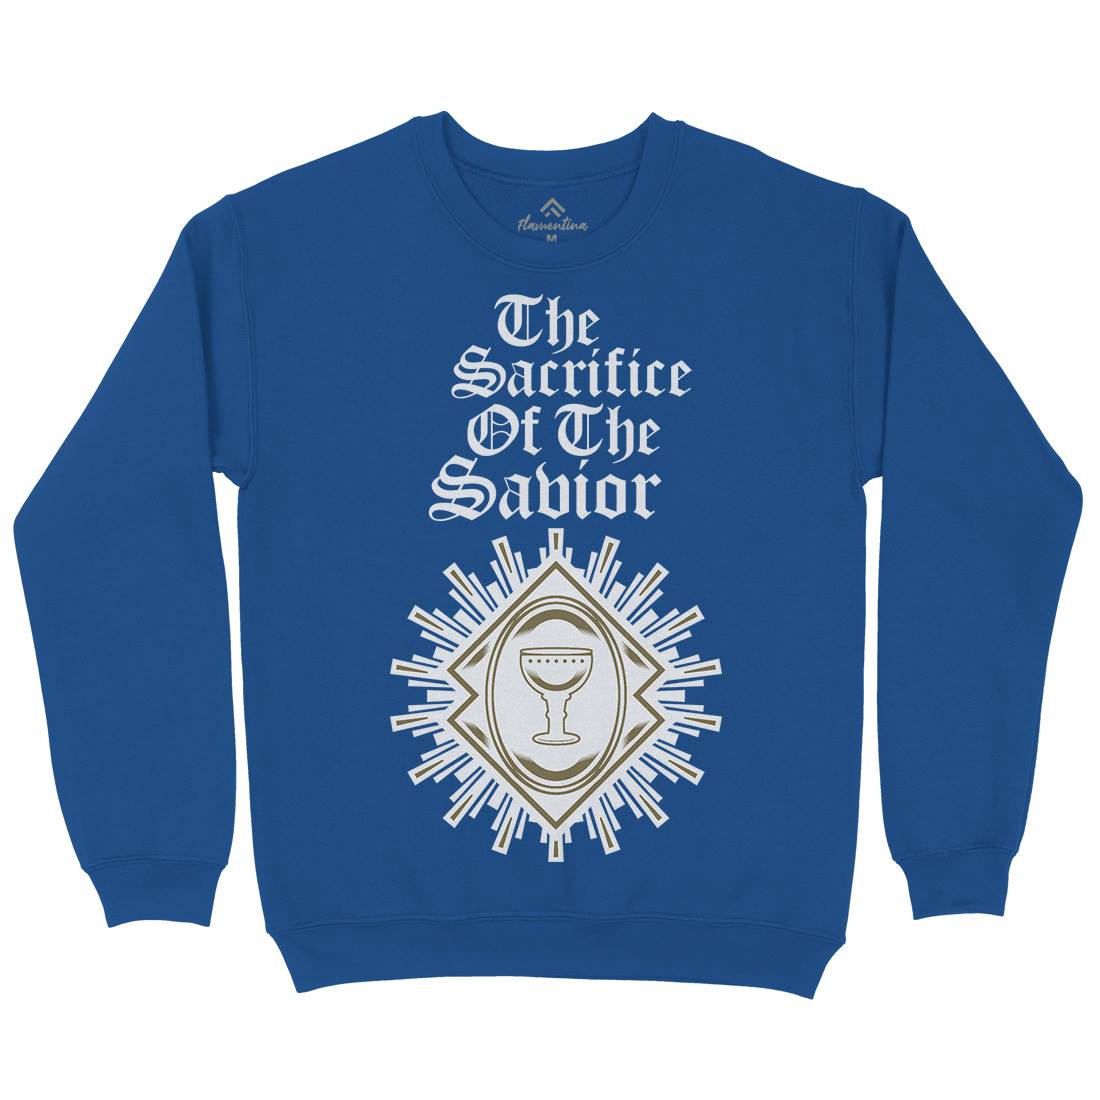 Sacrifice Of The Saviour Kids Crew Neck Sweatshirt Religion A385